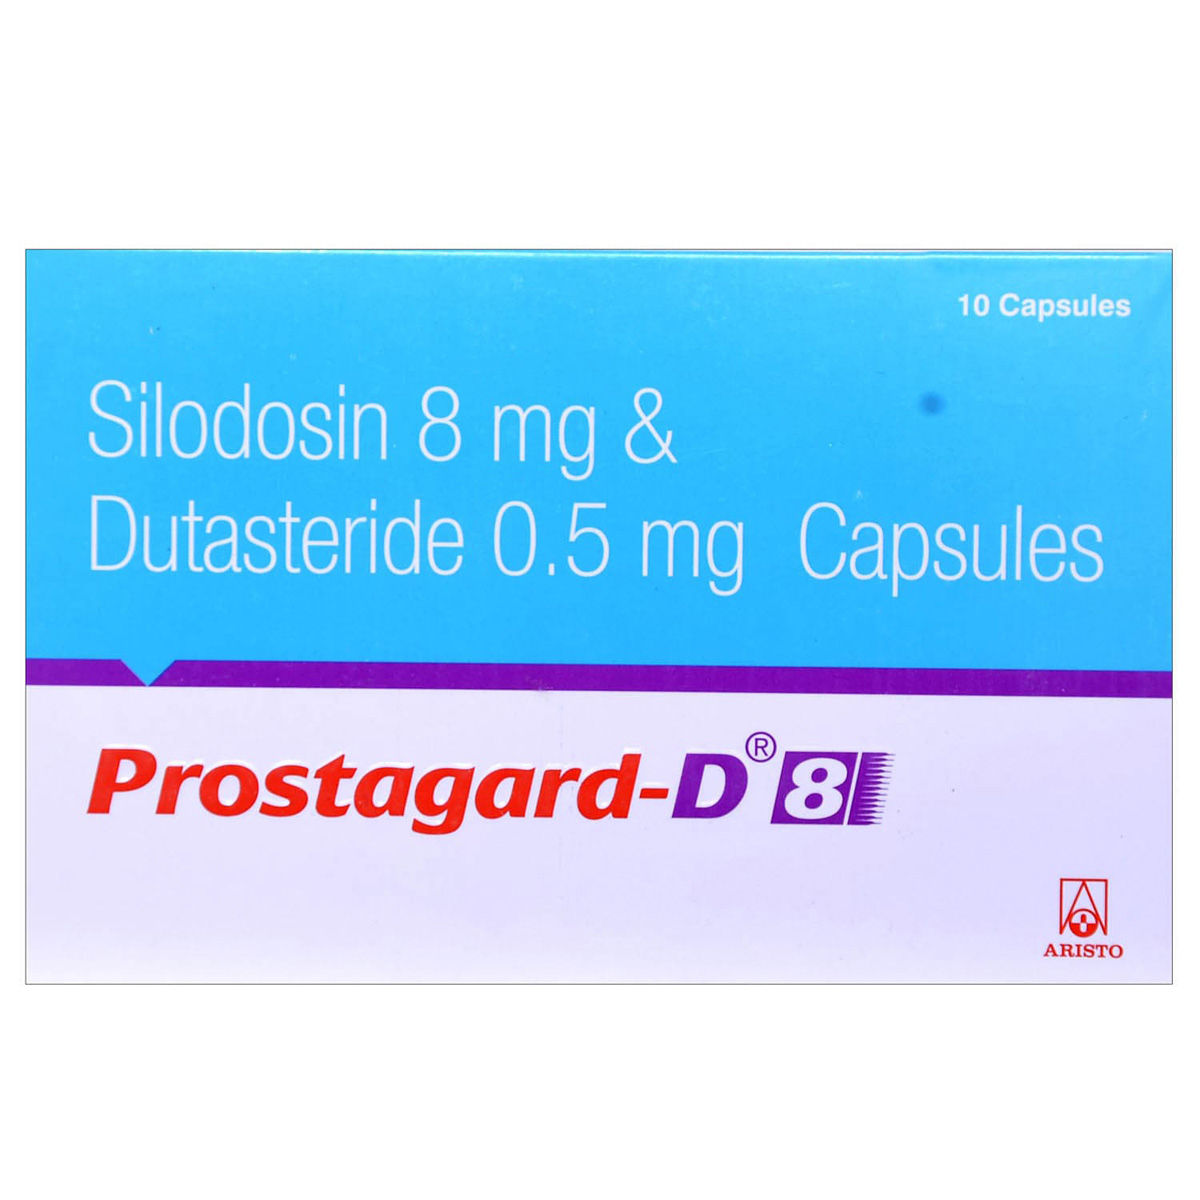 Buy Prostagard-D 8 Capsule 10's Online